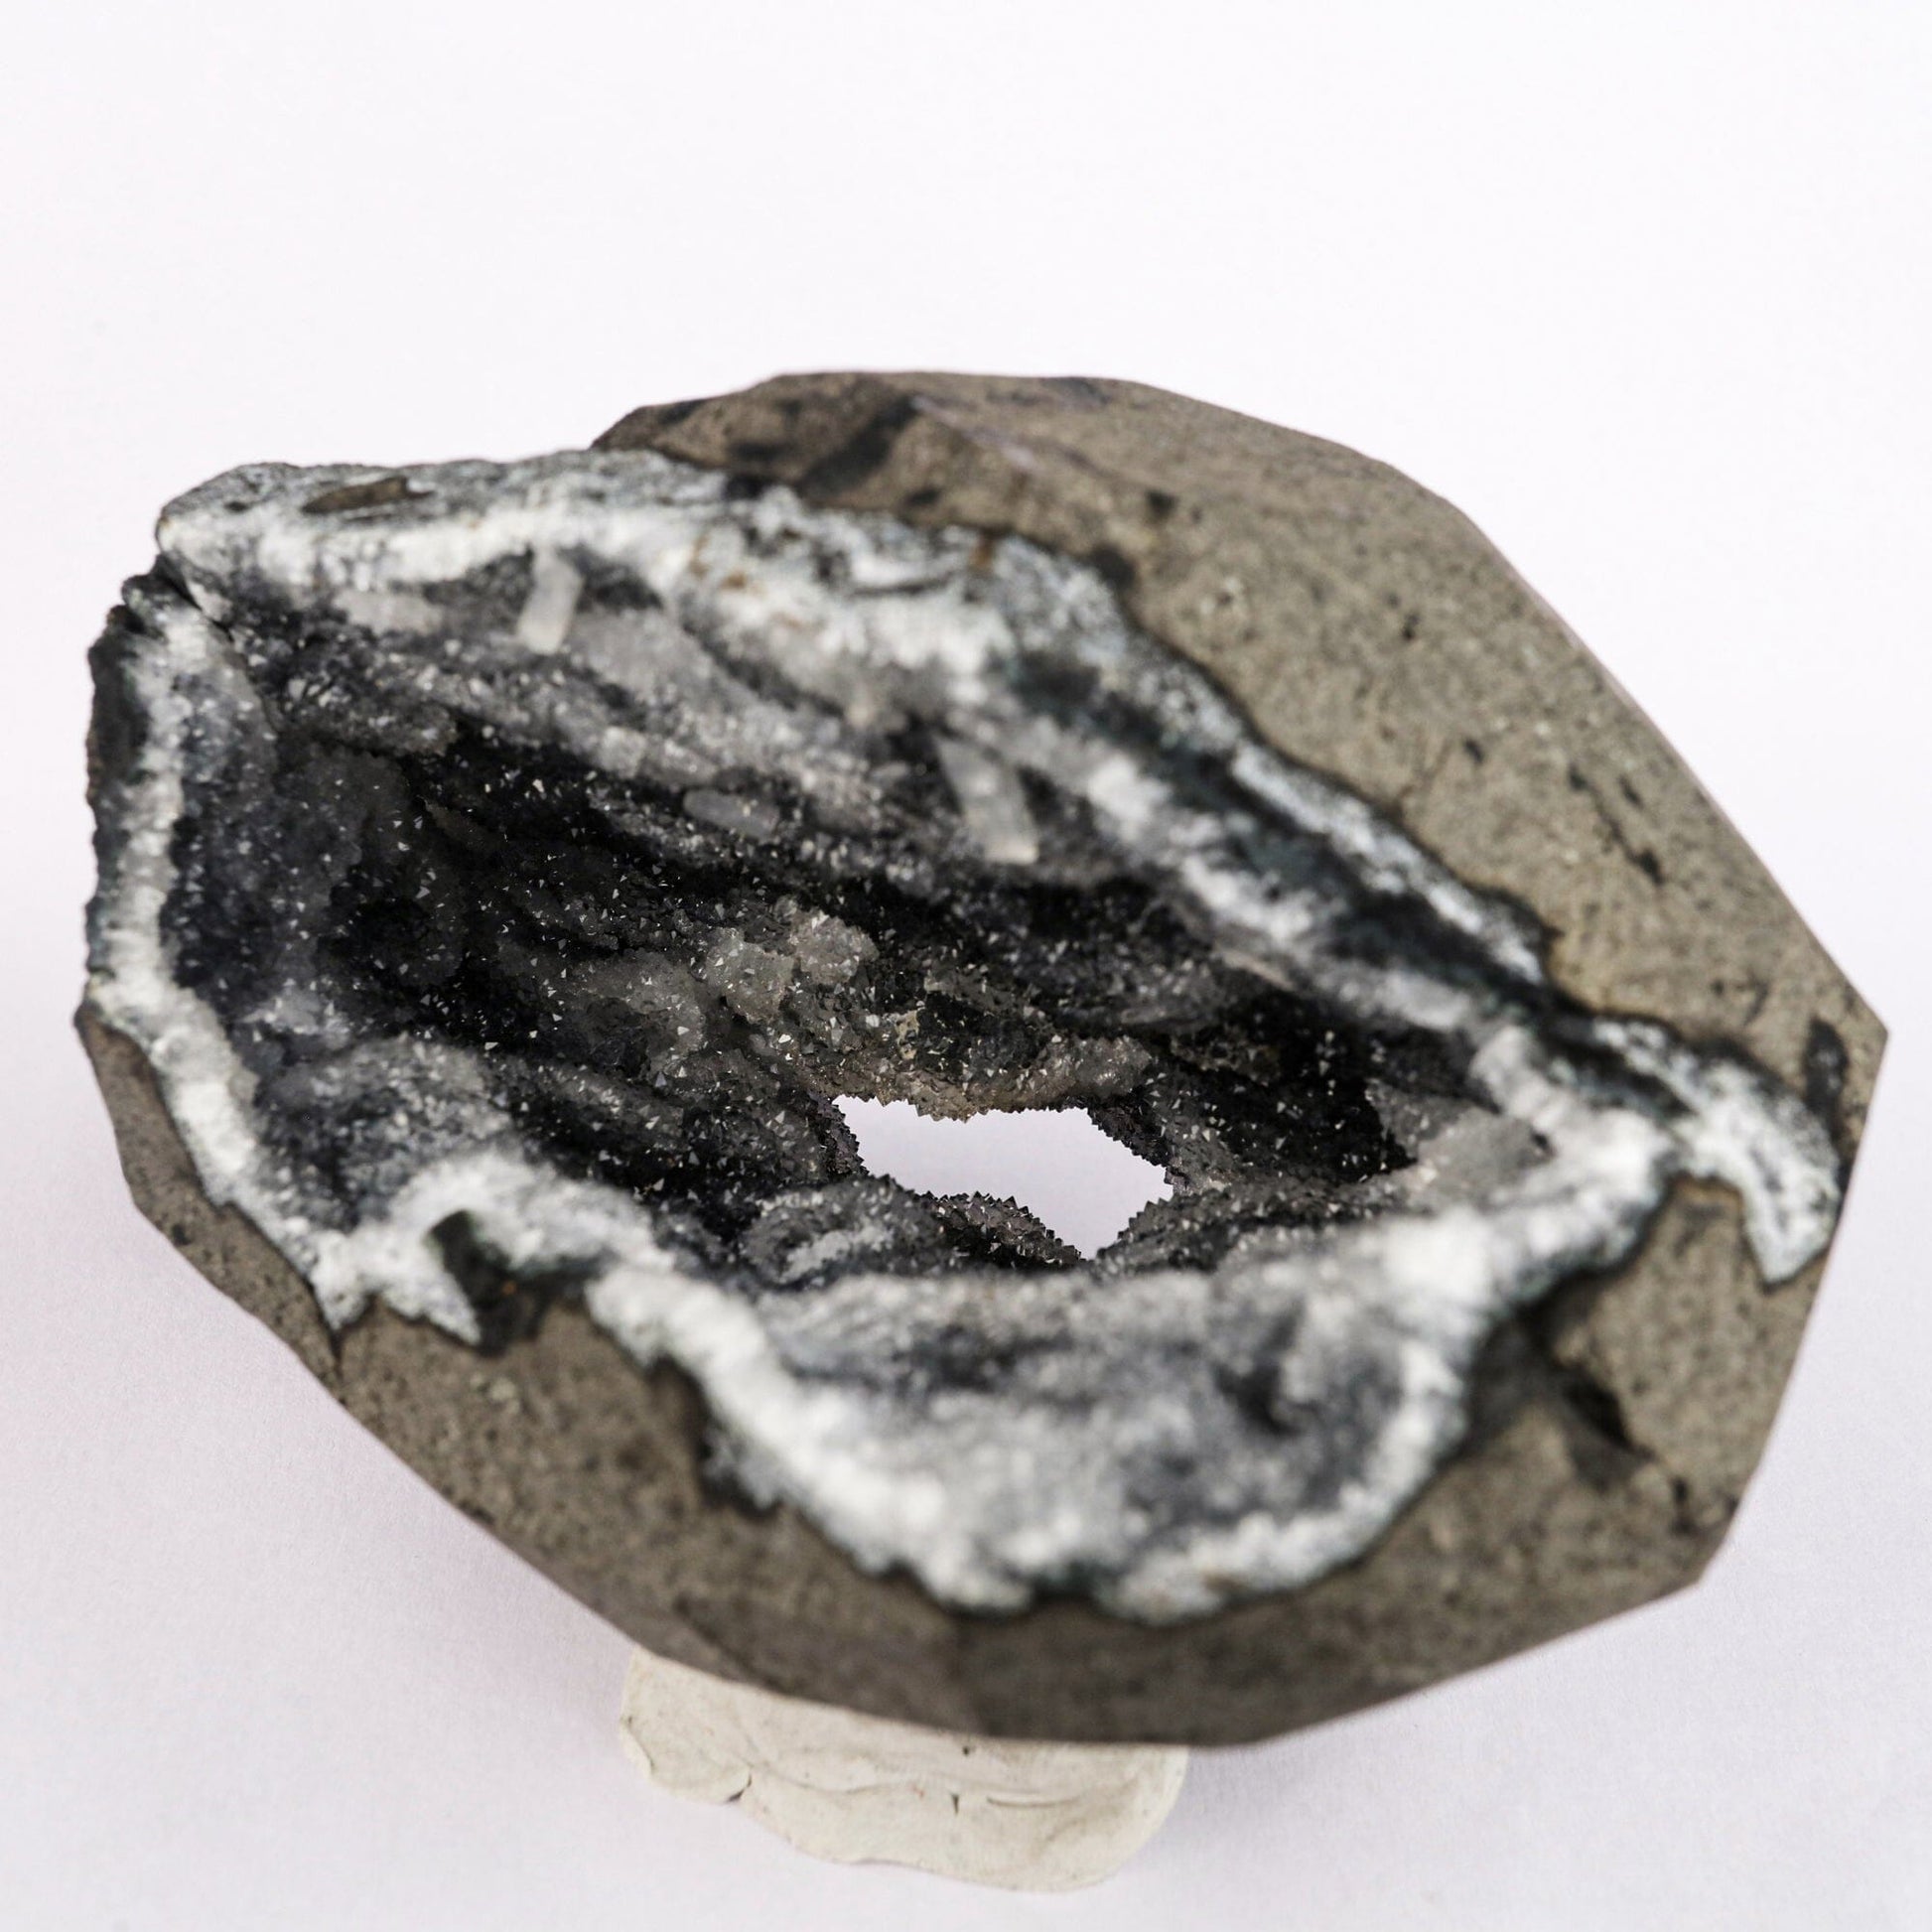 Sparkling Chalcedony Geode Natural Mineral Specimen # B 6561 Goosecreekite Superb Minerals 